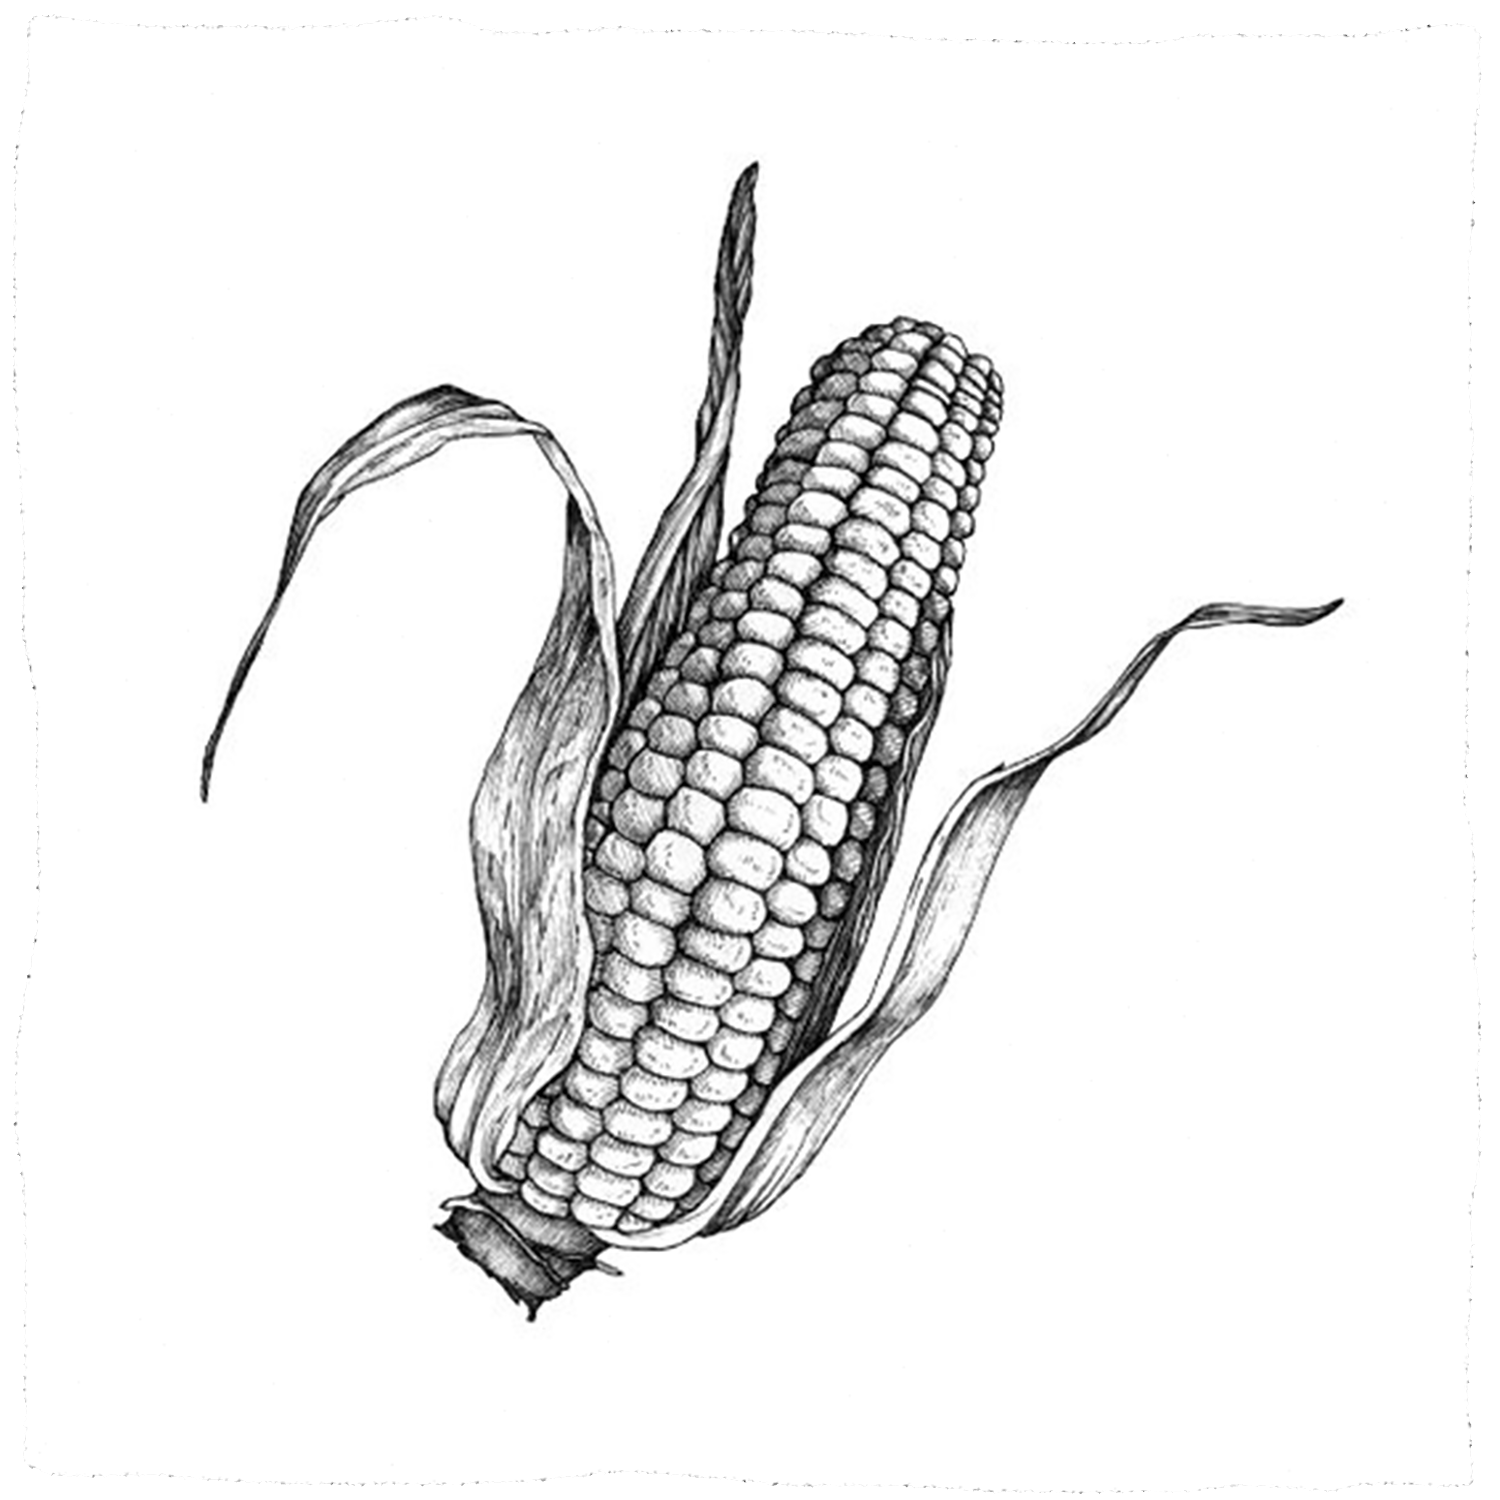 Corn illustration for a personnal calendar.